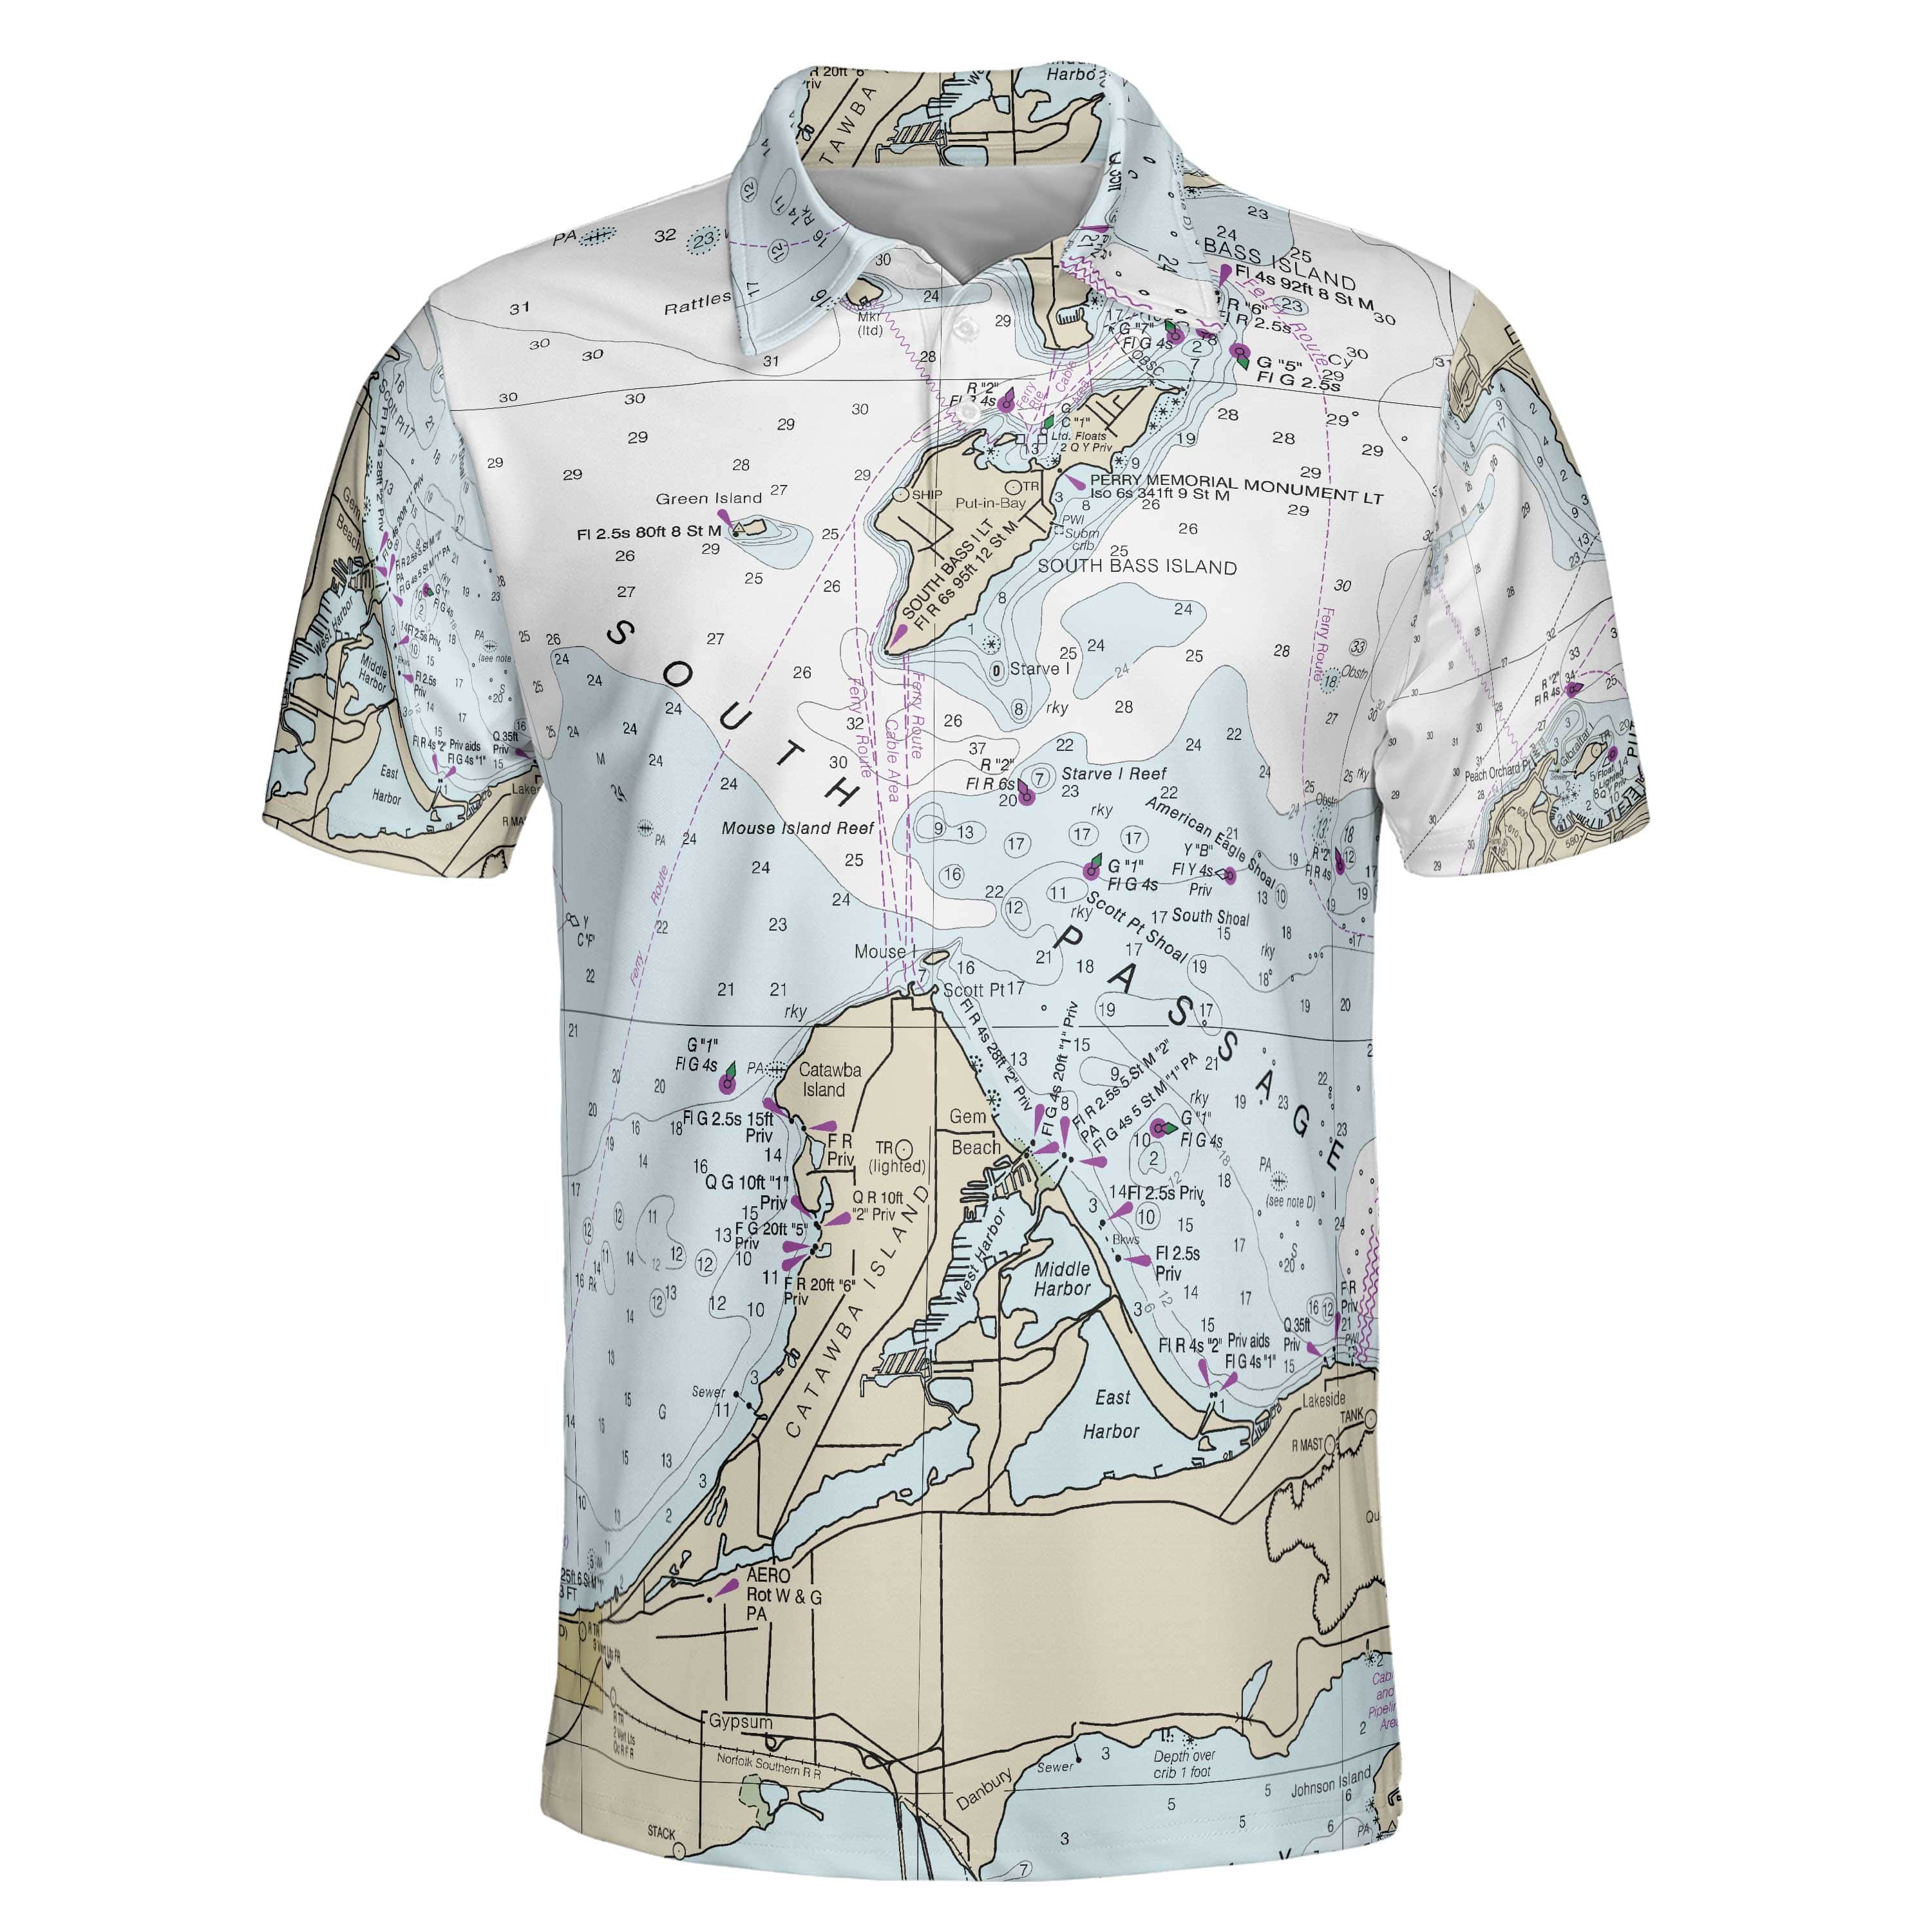 The Lake Erie Islands Mariner Polo Shirt